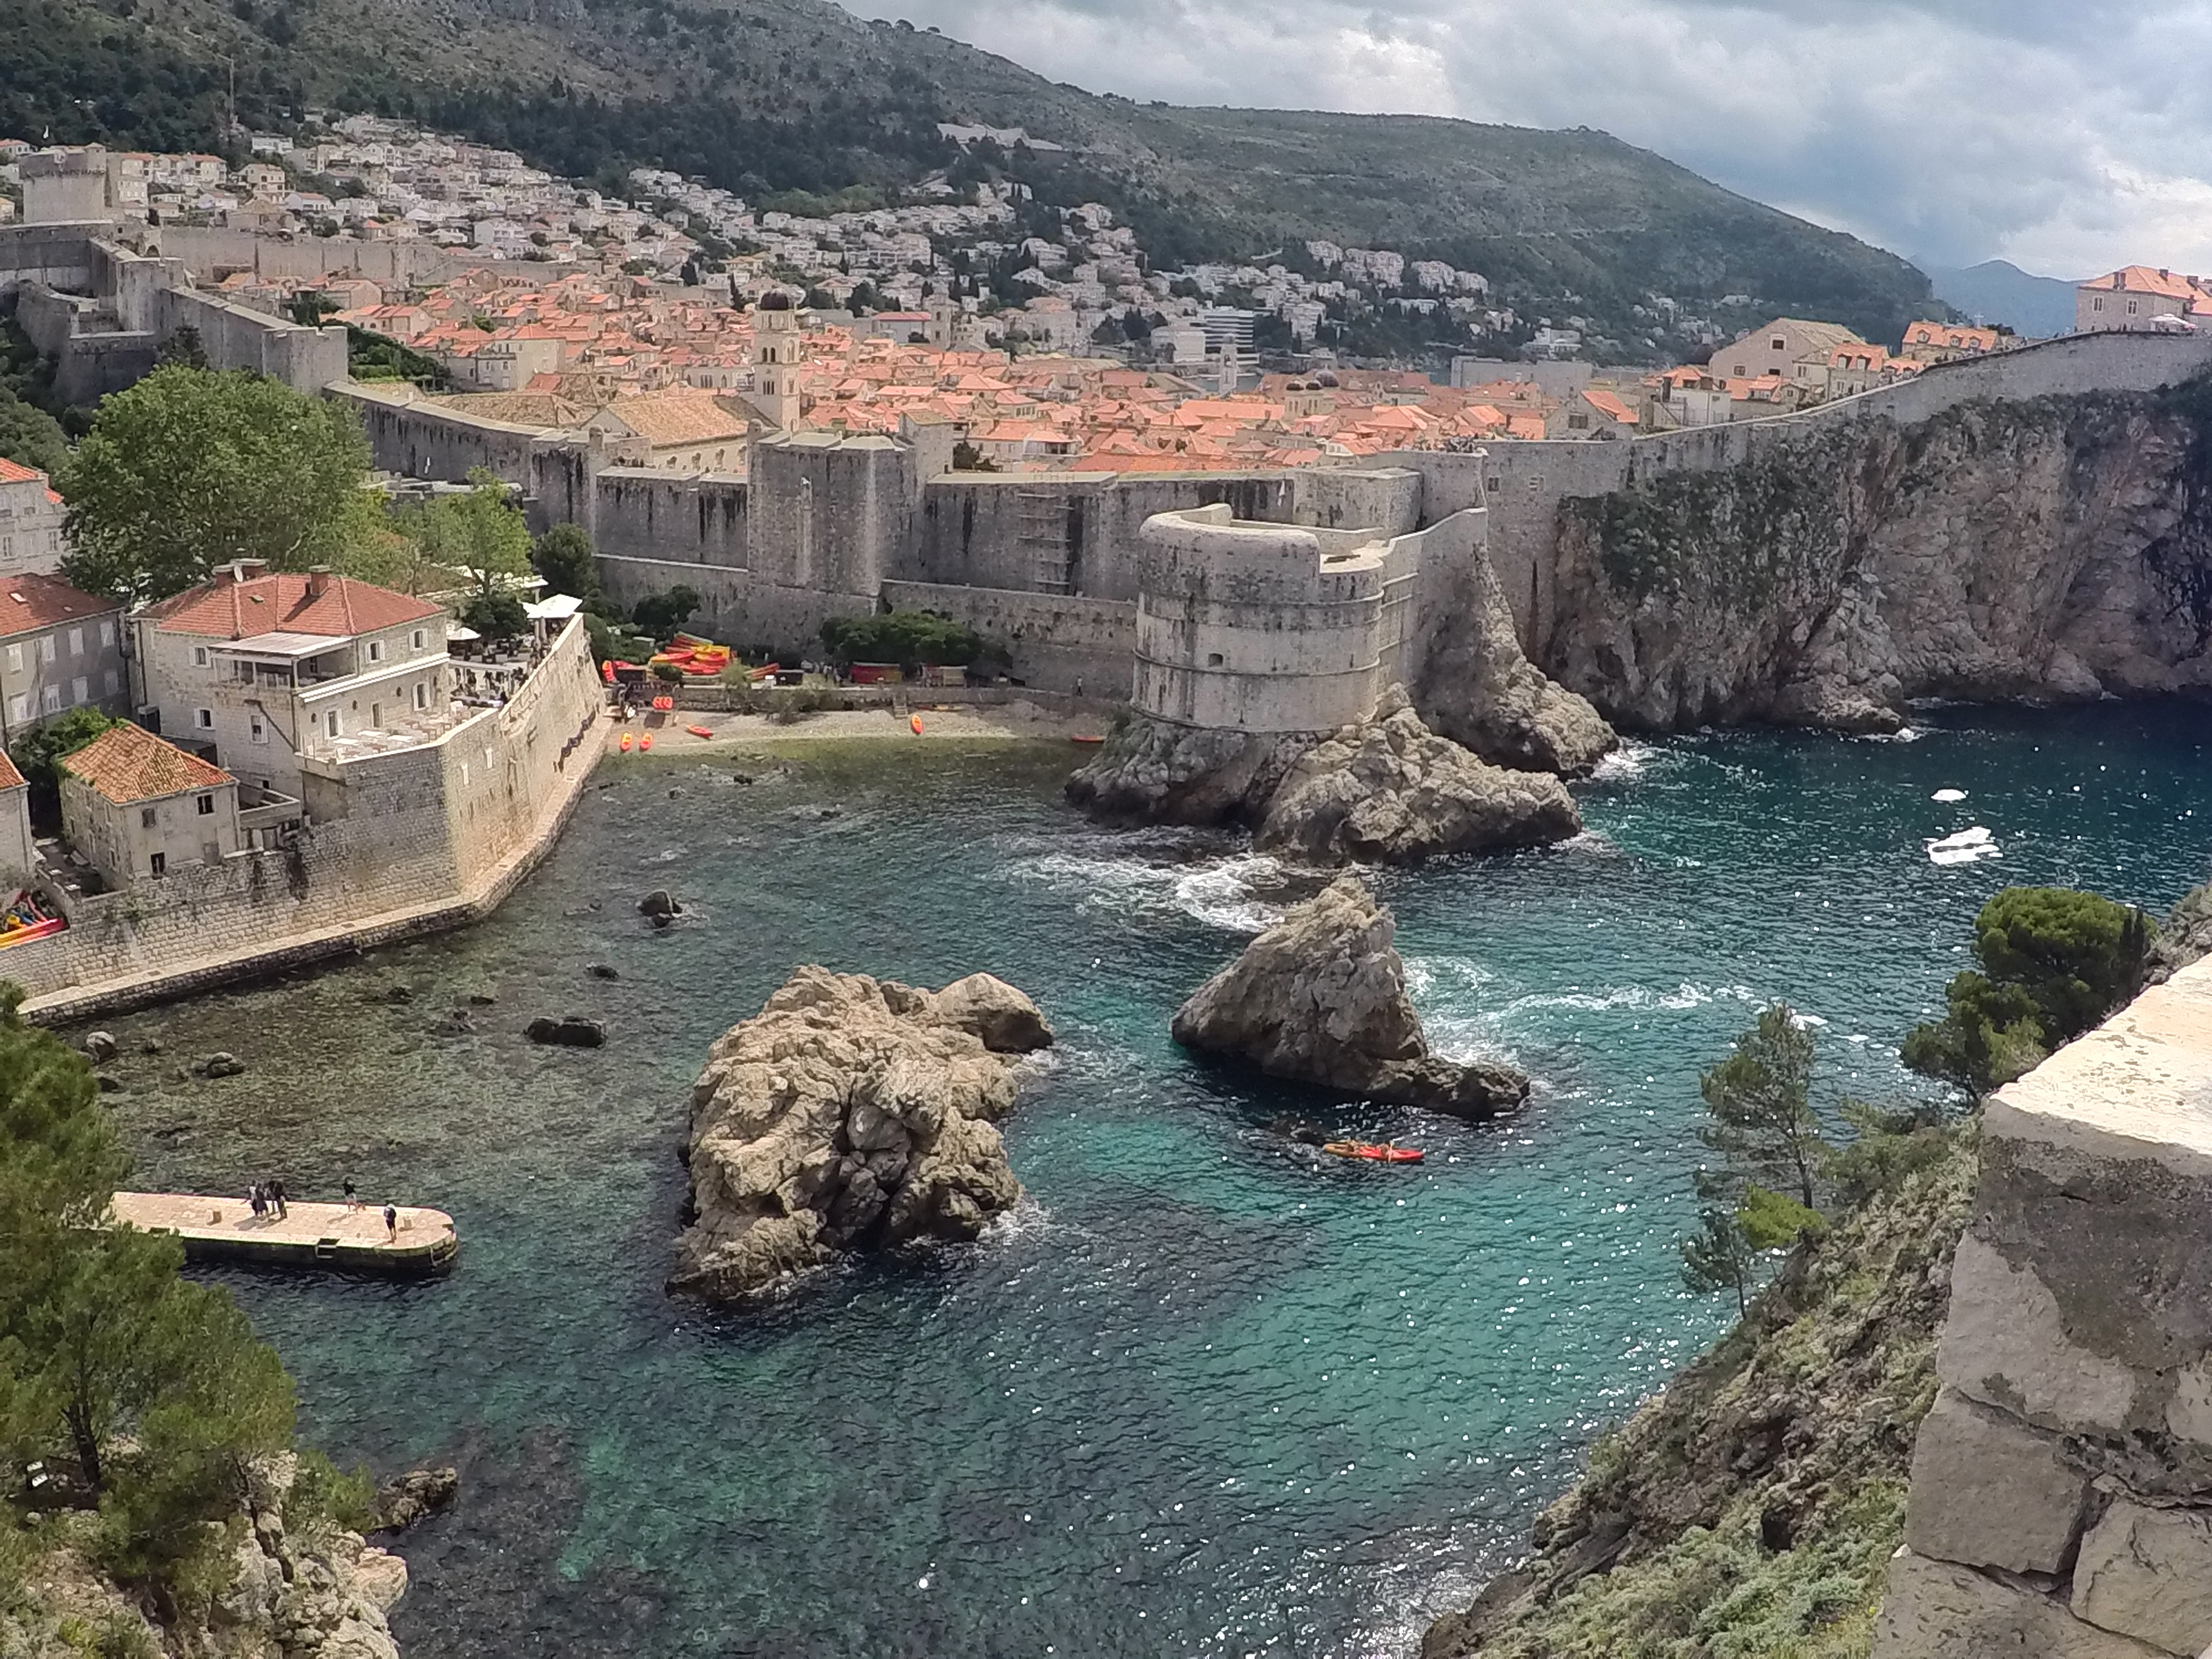 Walled city Dubrovnik from Fort Lovrijenac